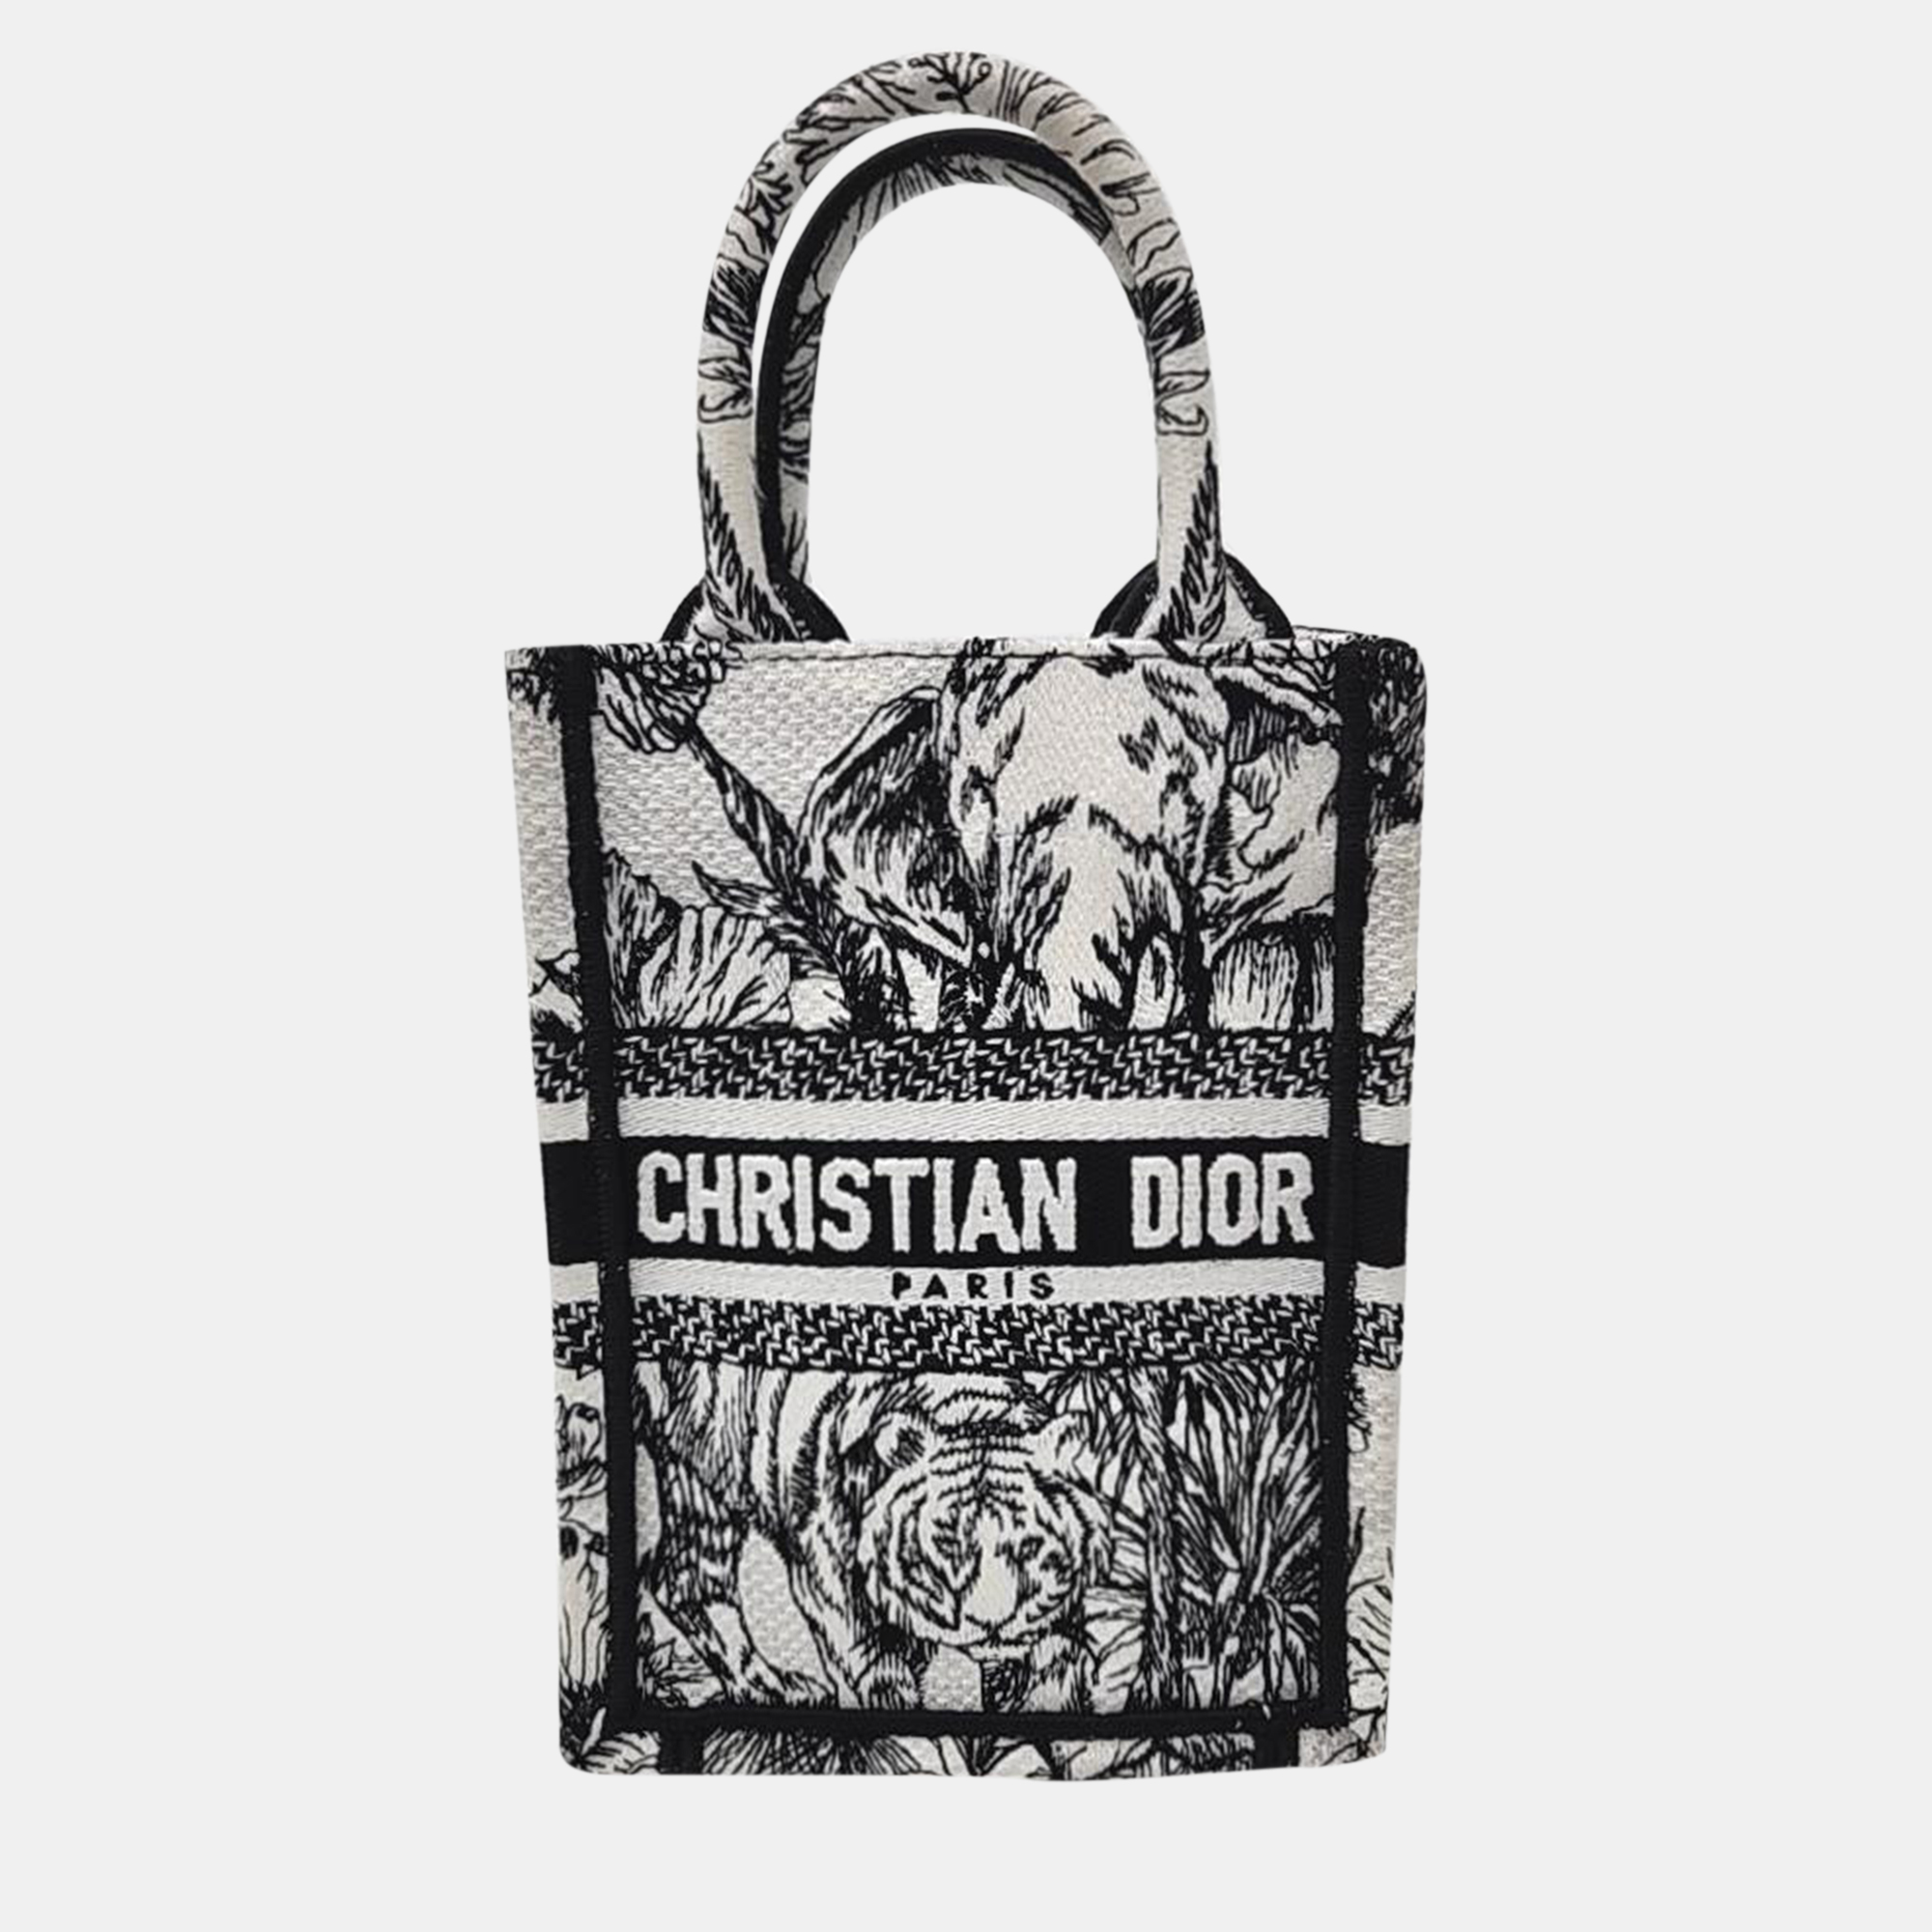 Christian dior black/white mini book tote phone bag